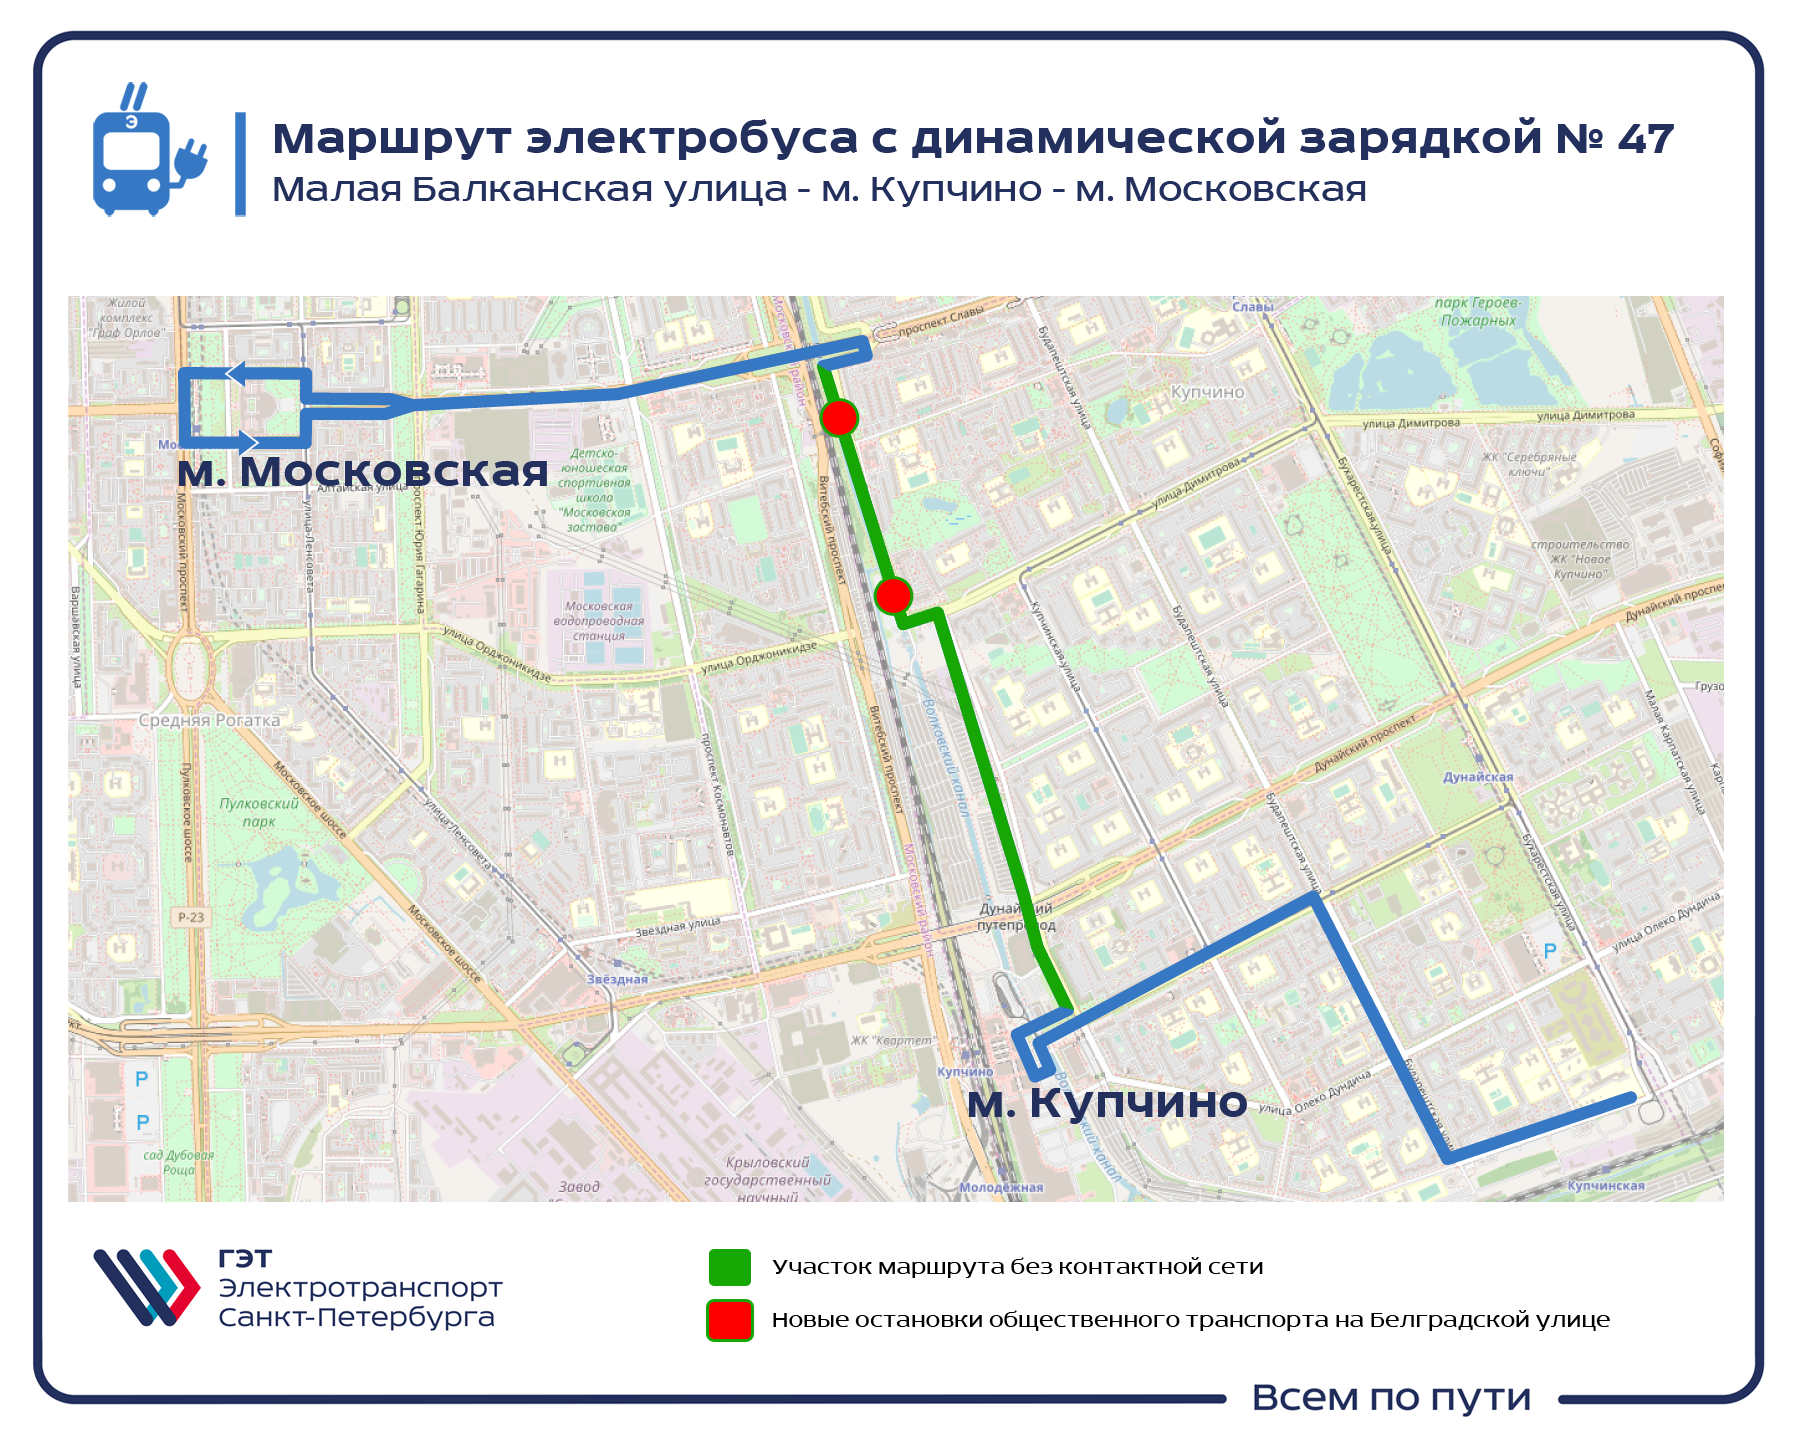 Saint-Petersburg — Individual Route Maps